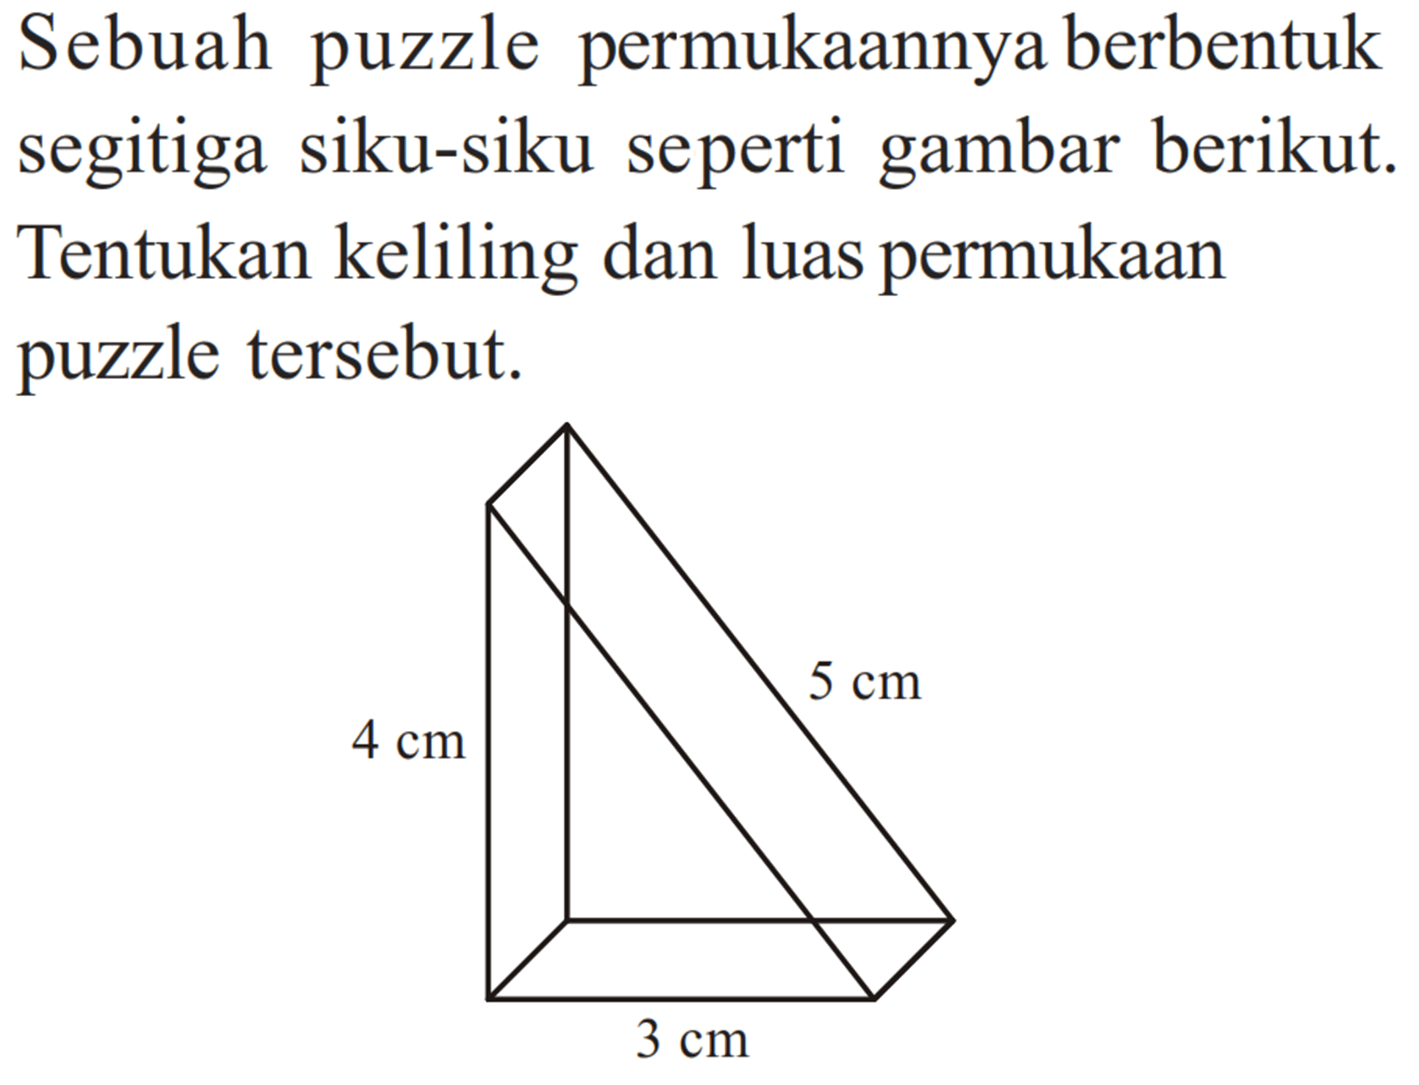 Sebuah puzzle permukaannya berbentuk segitiga siku-siku seperti gambar berikut. Tentukan keliling dan luas permukaan puzzle tersebut. 
4 cm 5 cm 3 cm